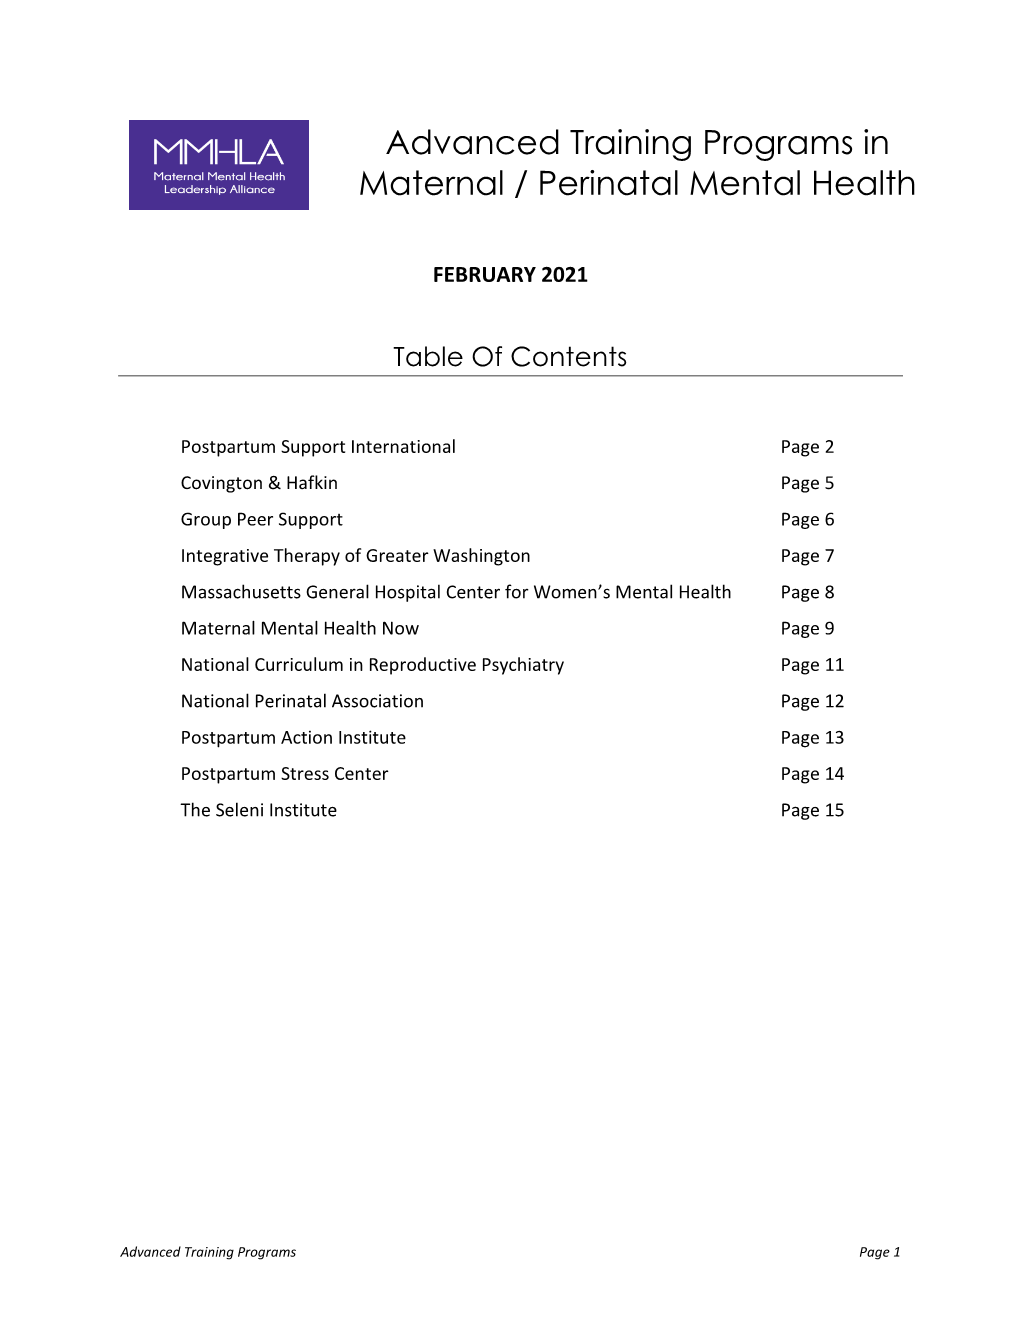 Advanced Training Programs in Maternal / Perinatal Mental Health